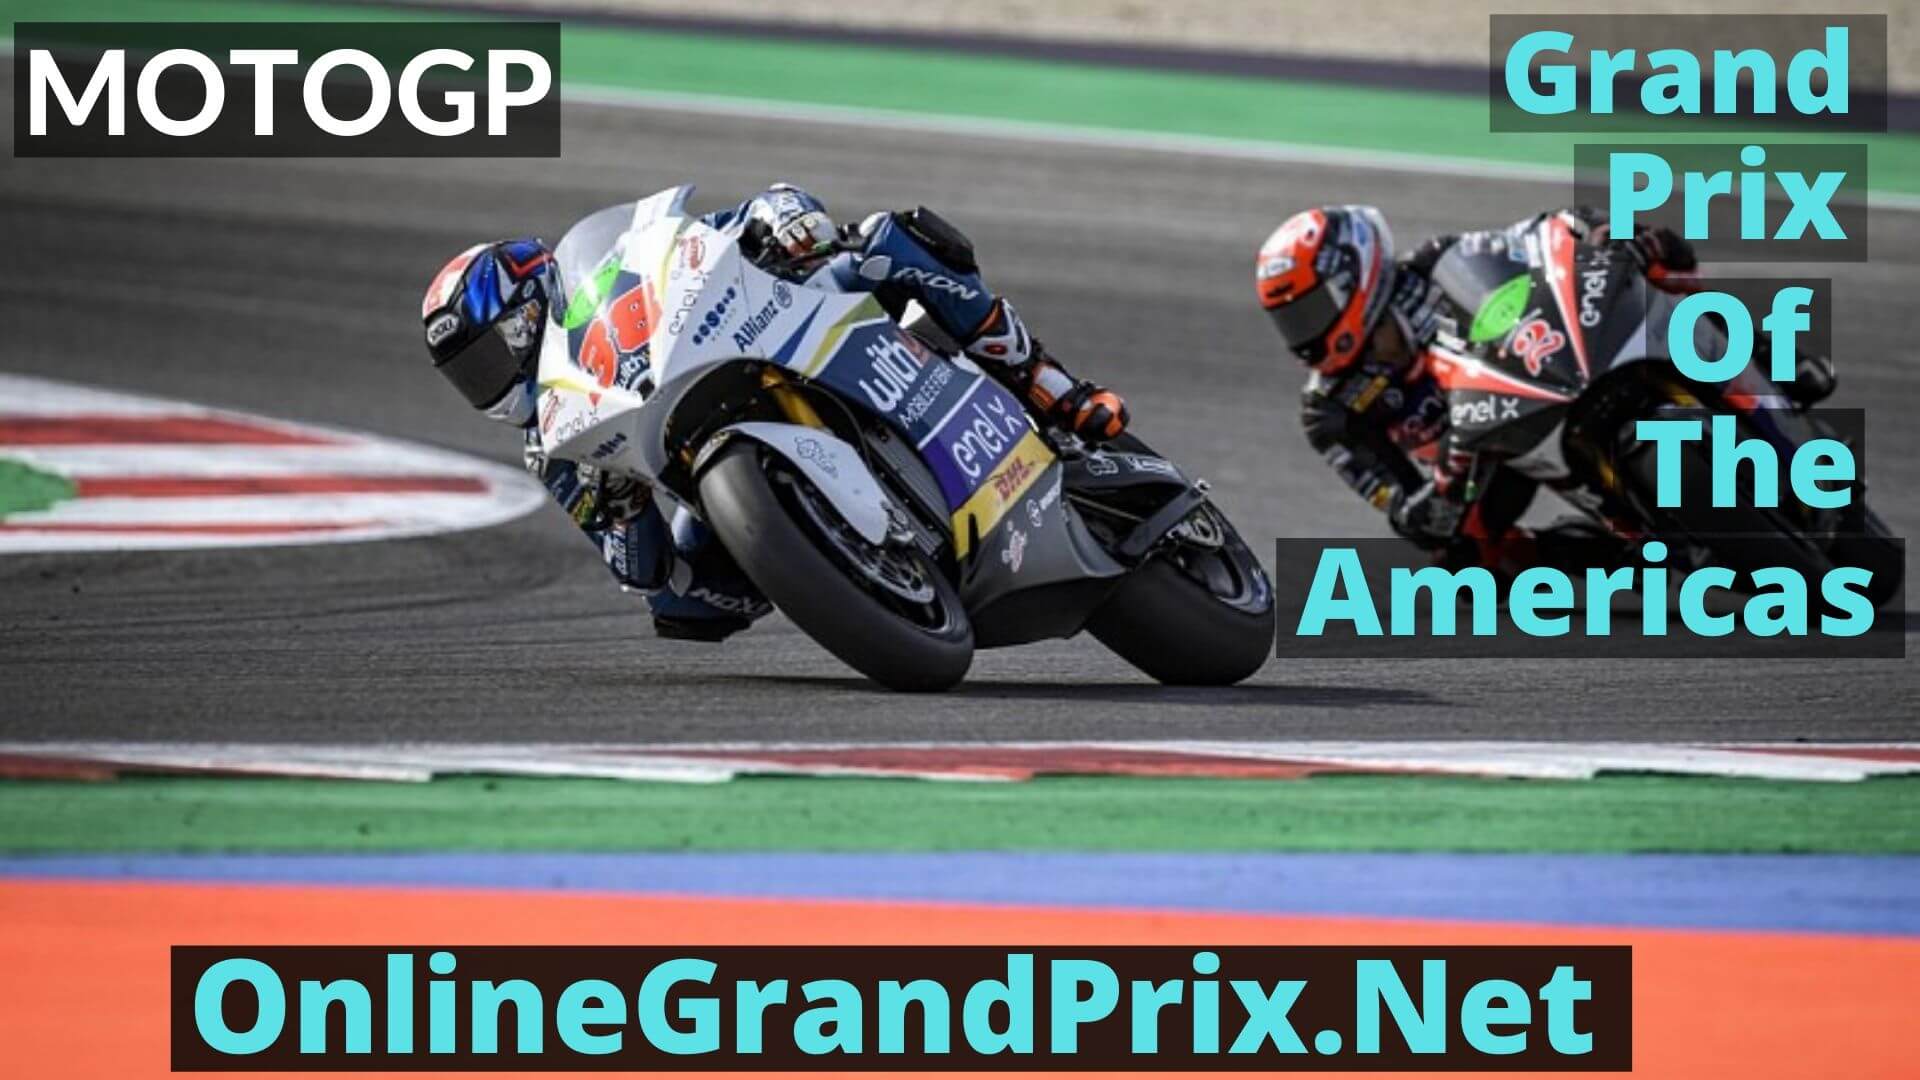 Grand Prix of The Americas Live